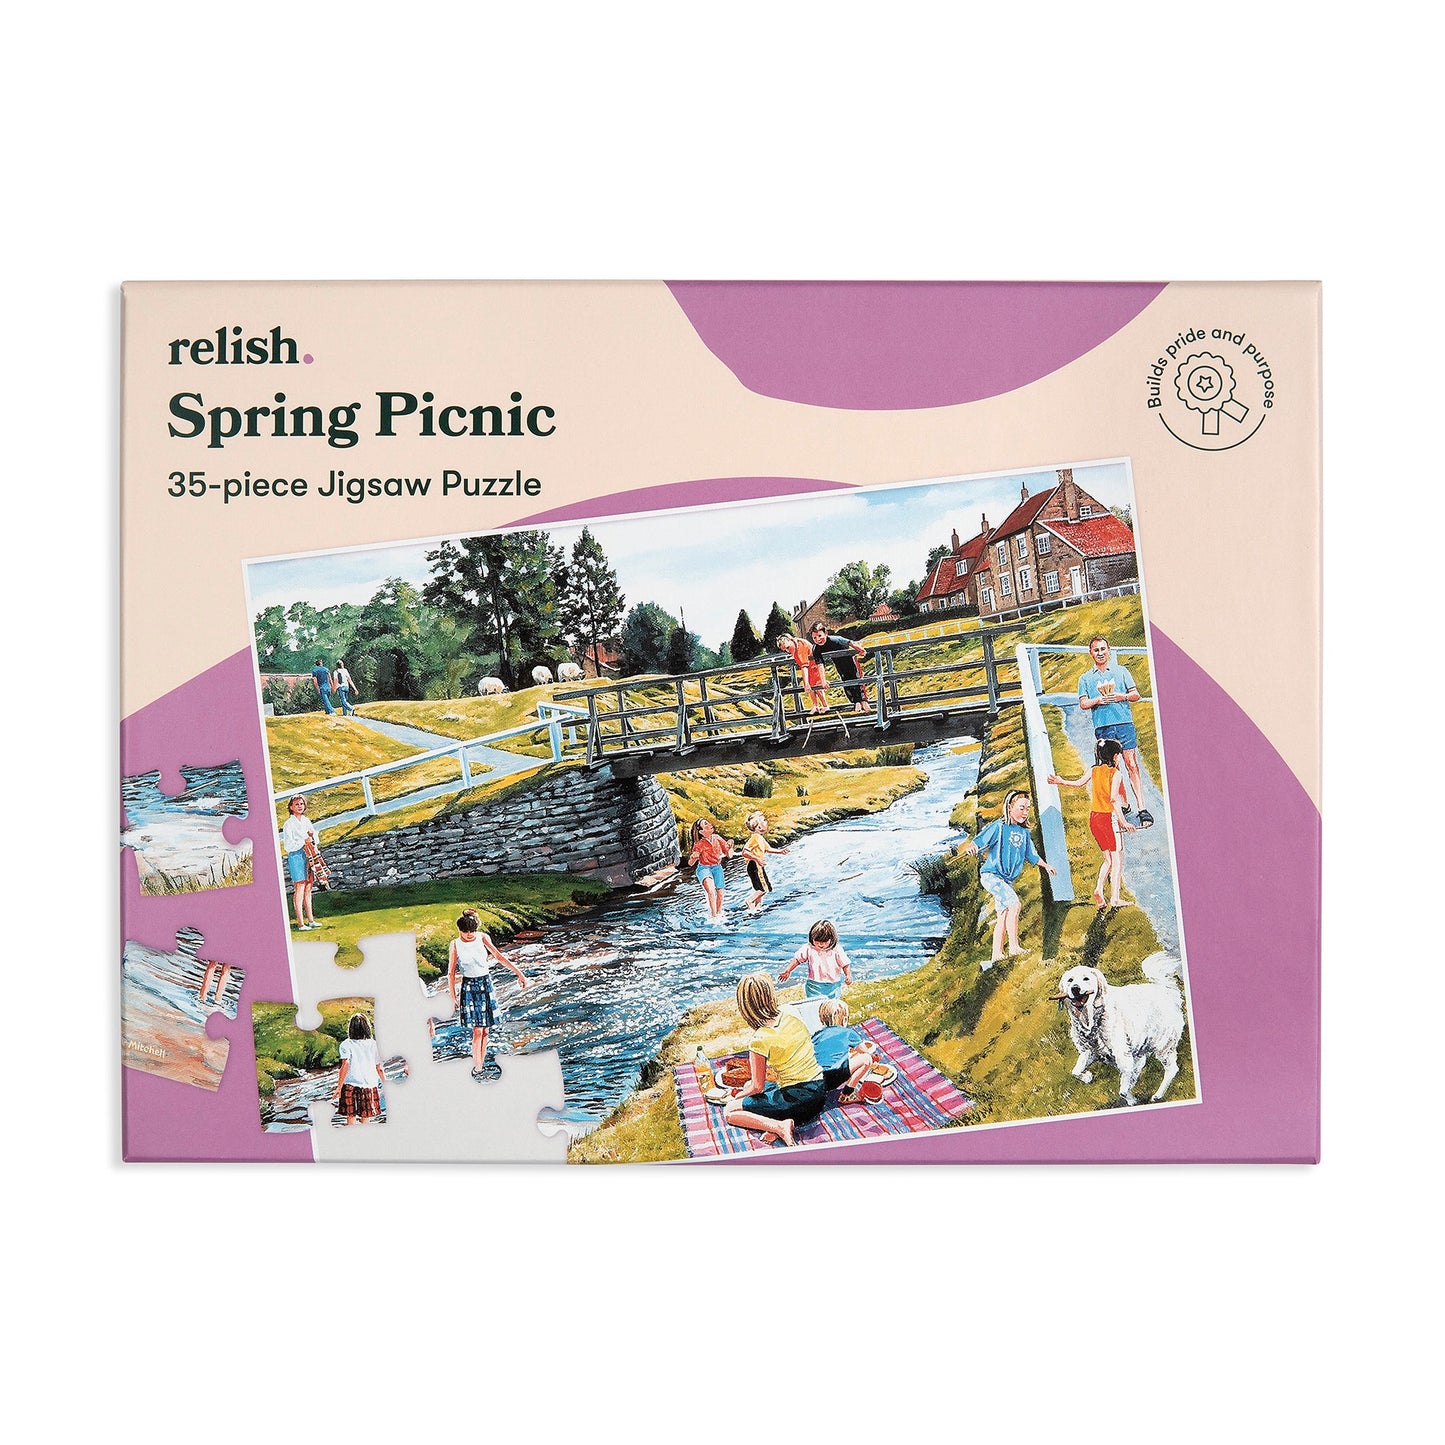 35 piece jigsaw puzzle "Spring Picnic"